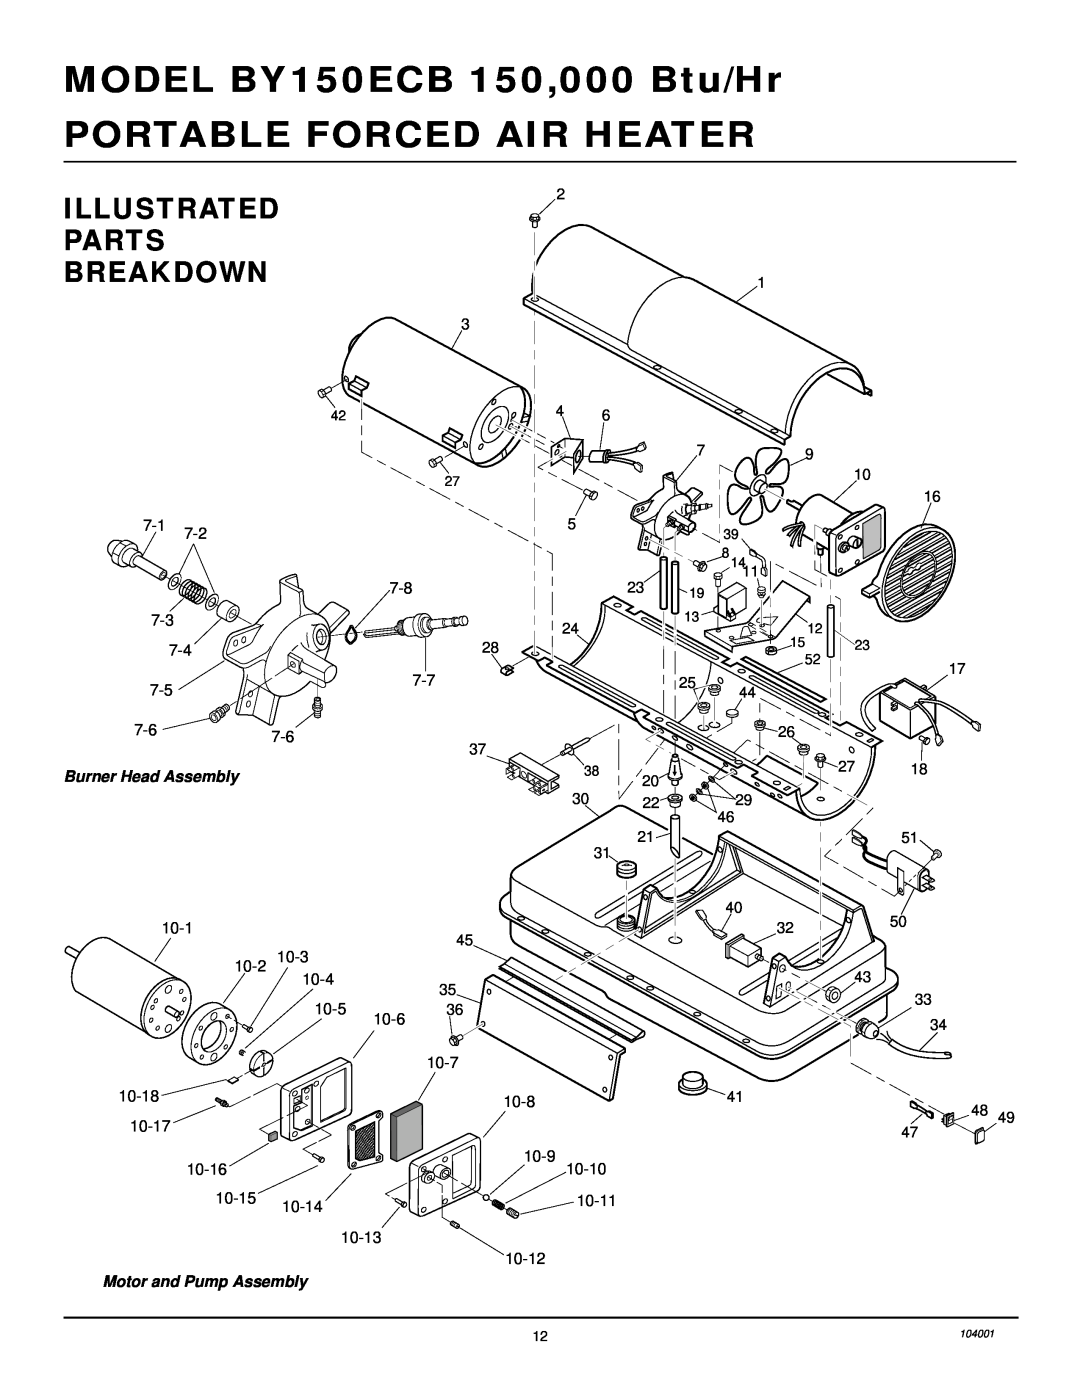 Desa 10BY150ECB owner manual Illustrated Parts Breakdown, MODEL BY150ECB 150,000 Btu/Hr, Portable Forced Air Heater 